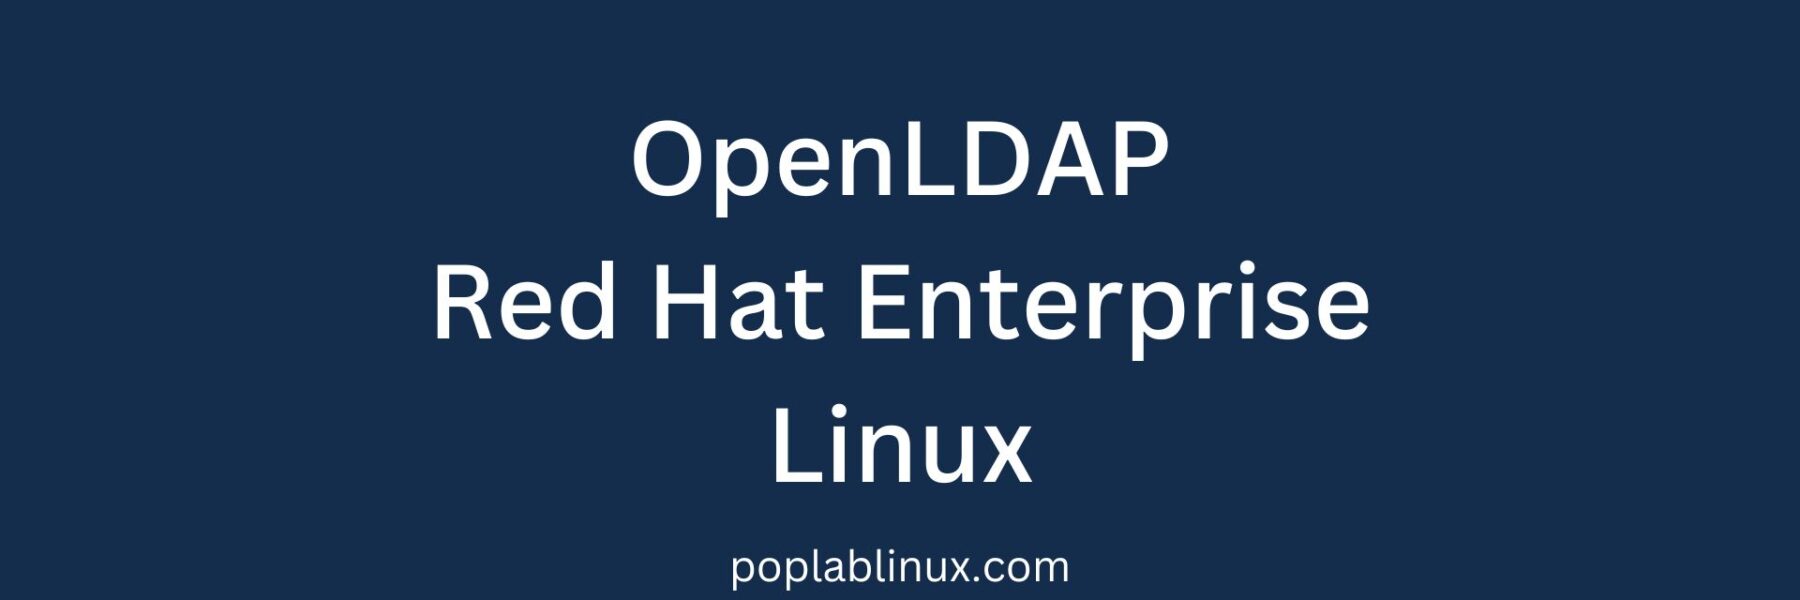 OpenLDAP Red Hat Enterprise Linux